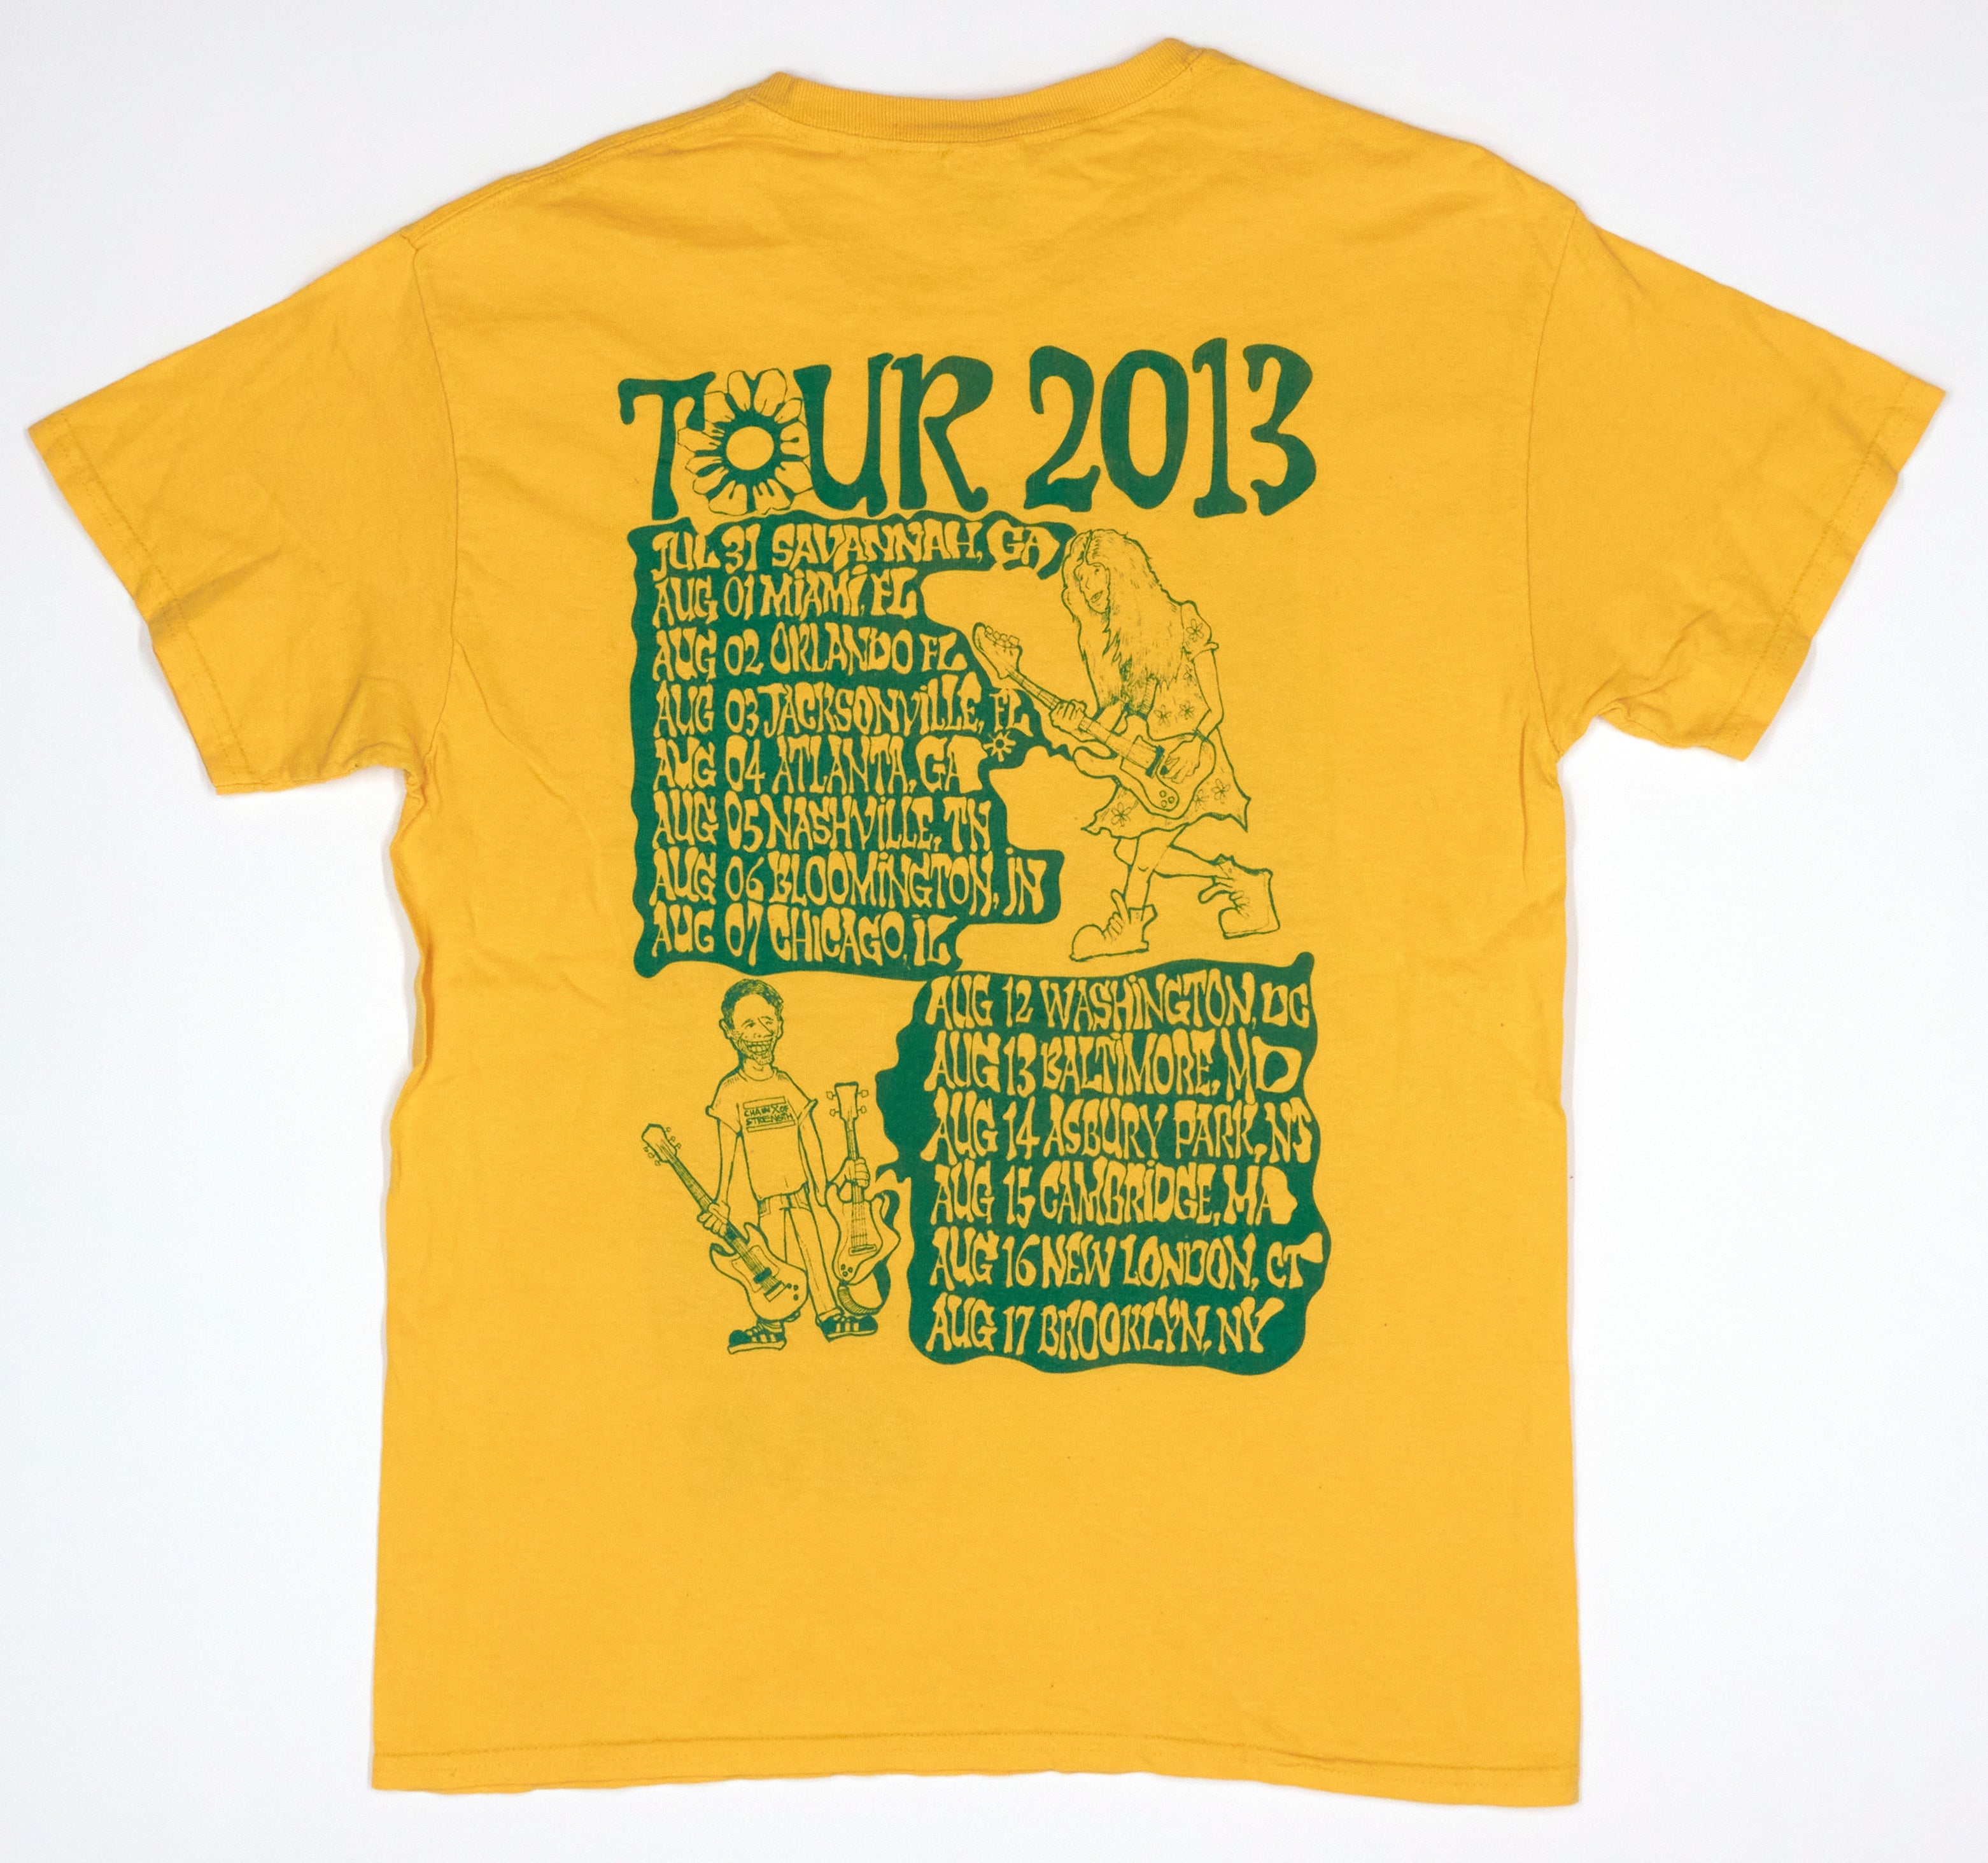 Give – July/August Tour 2013 Shirt Size Medium